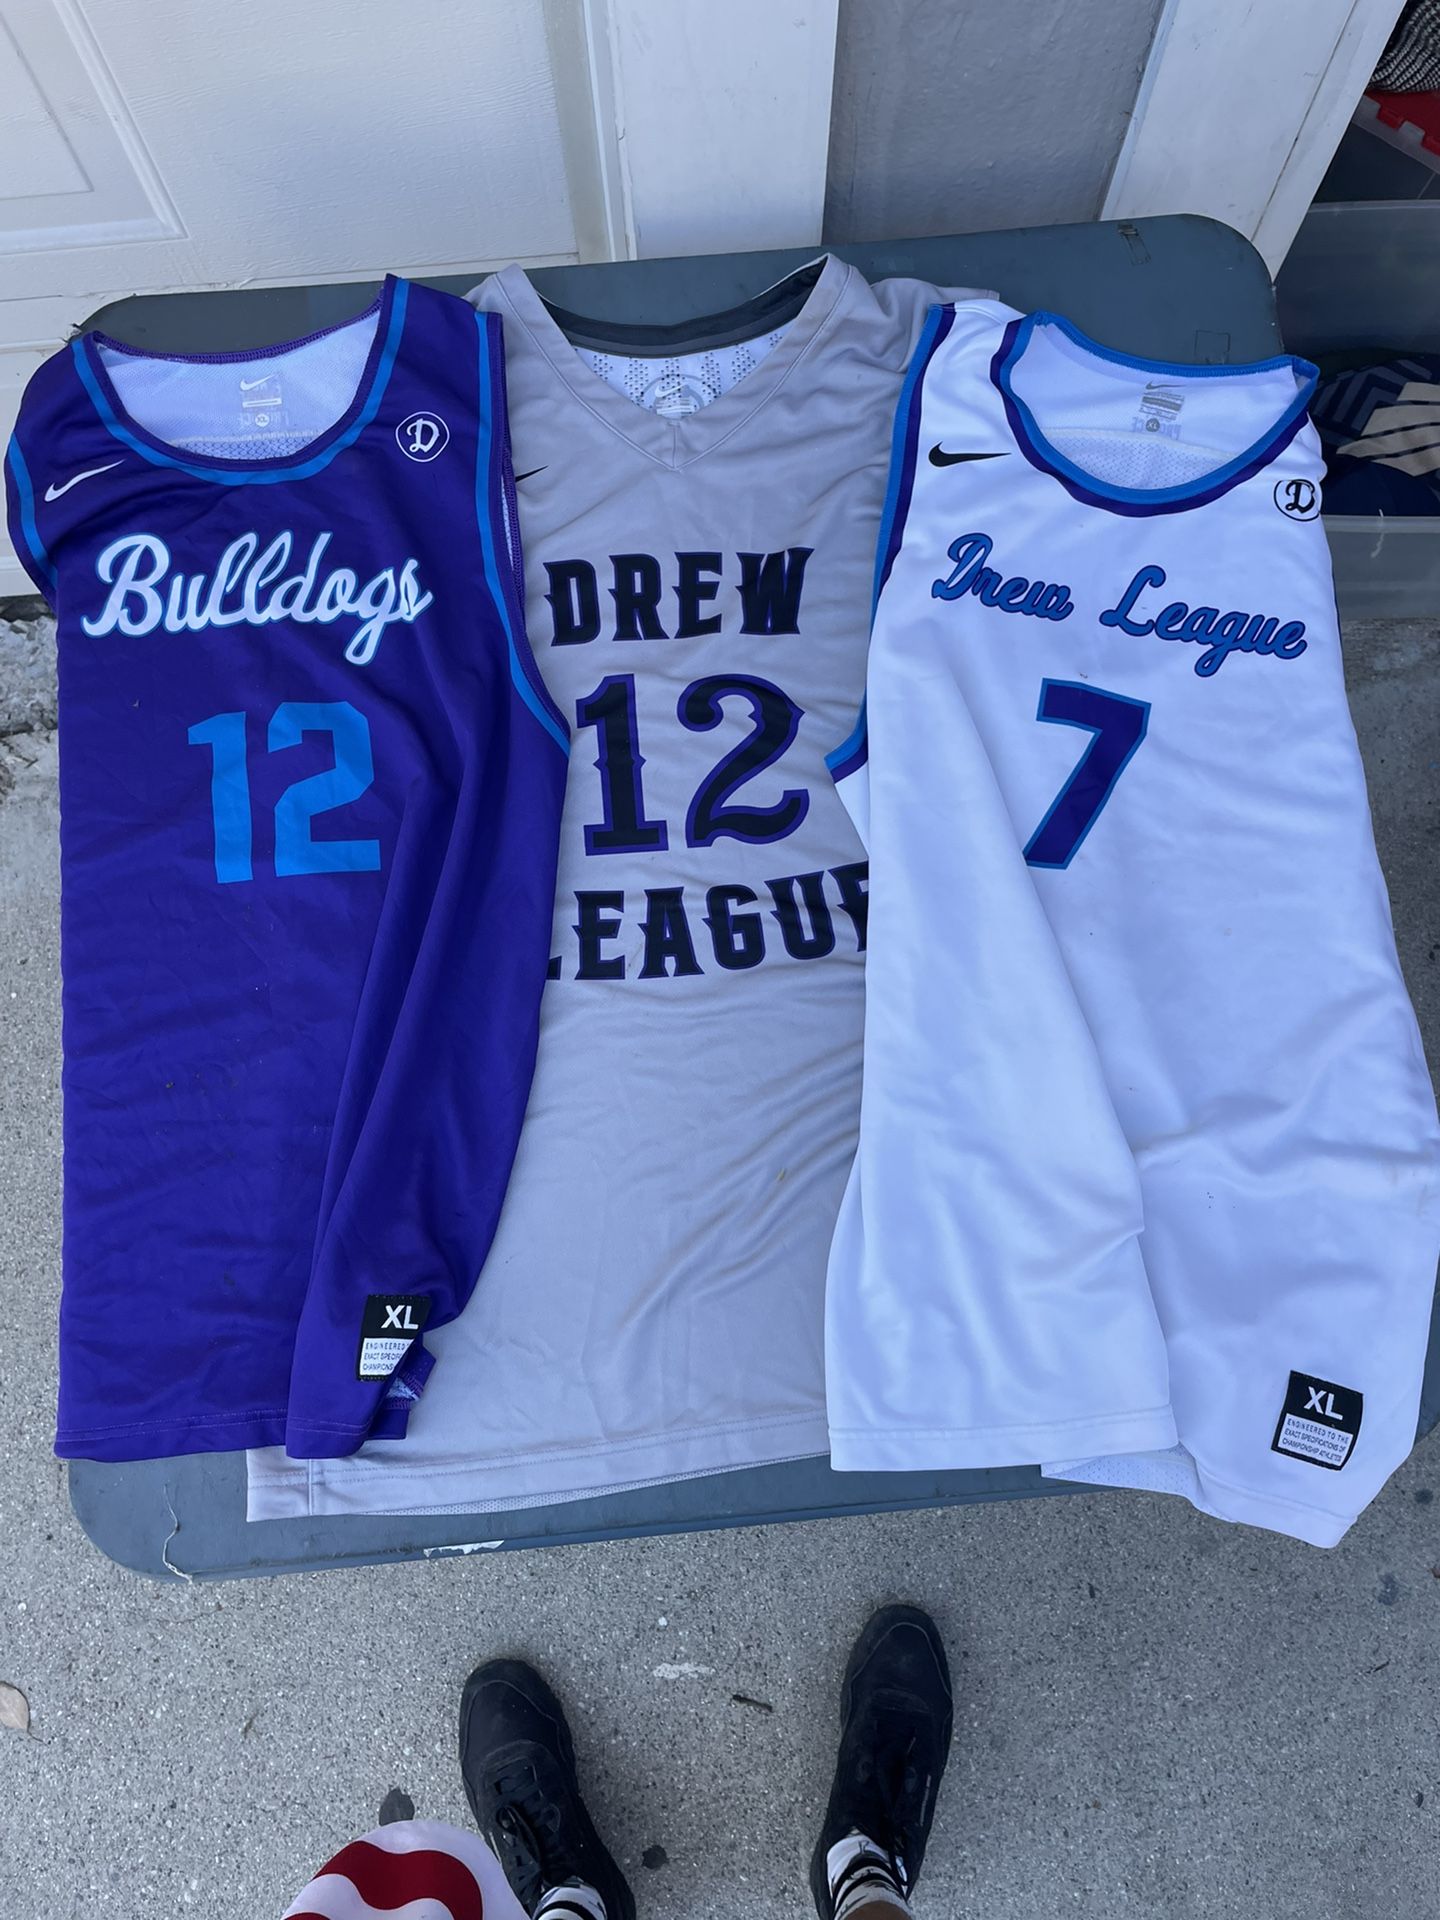 Drew league basketball jerseys Collectors item. $$$